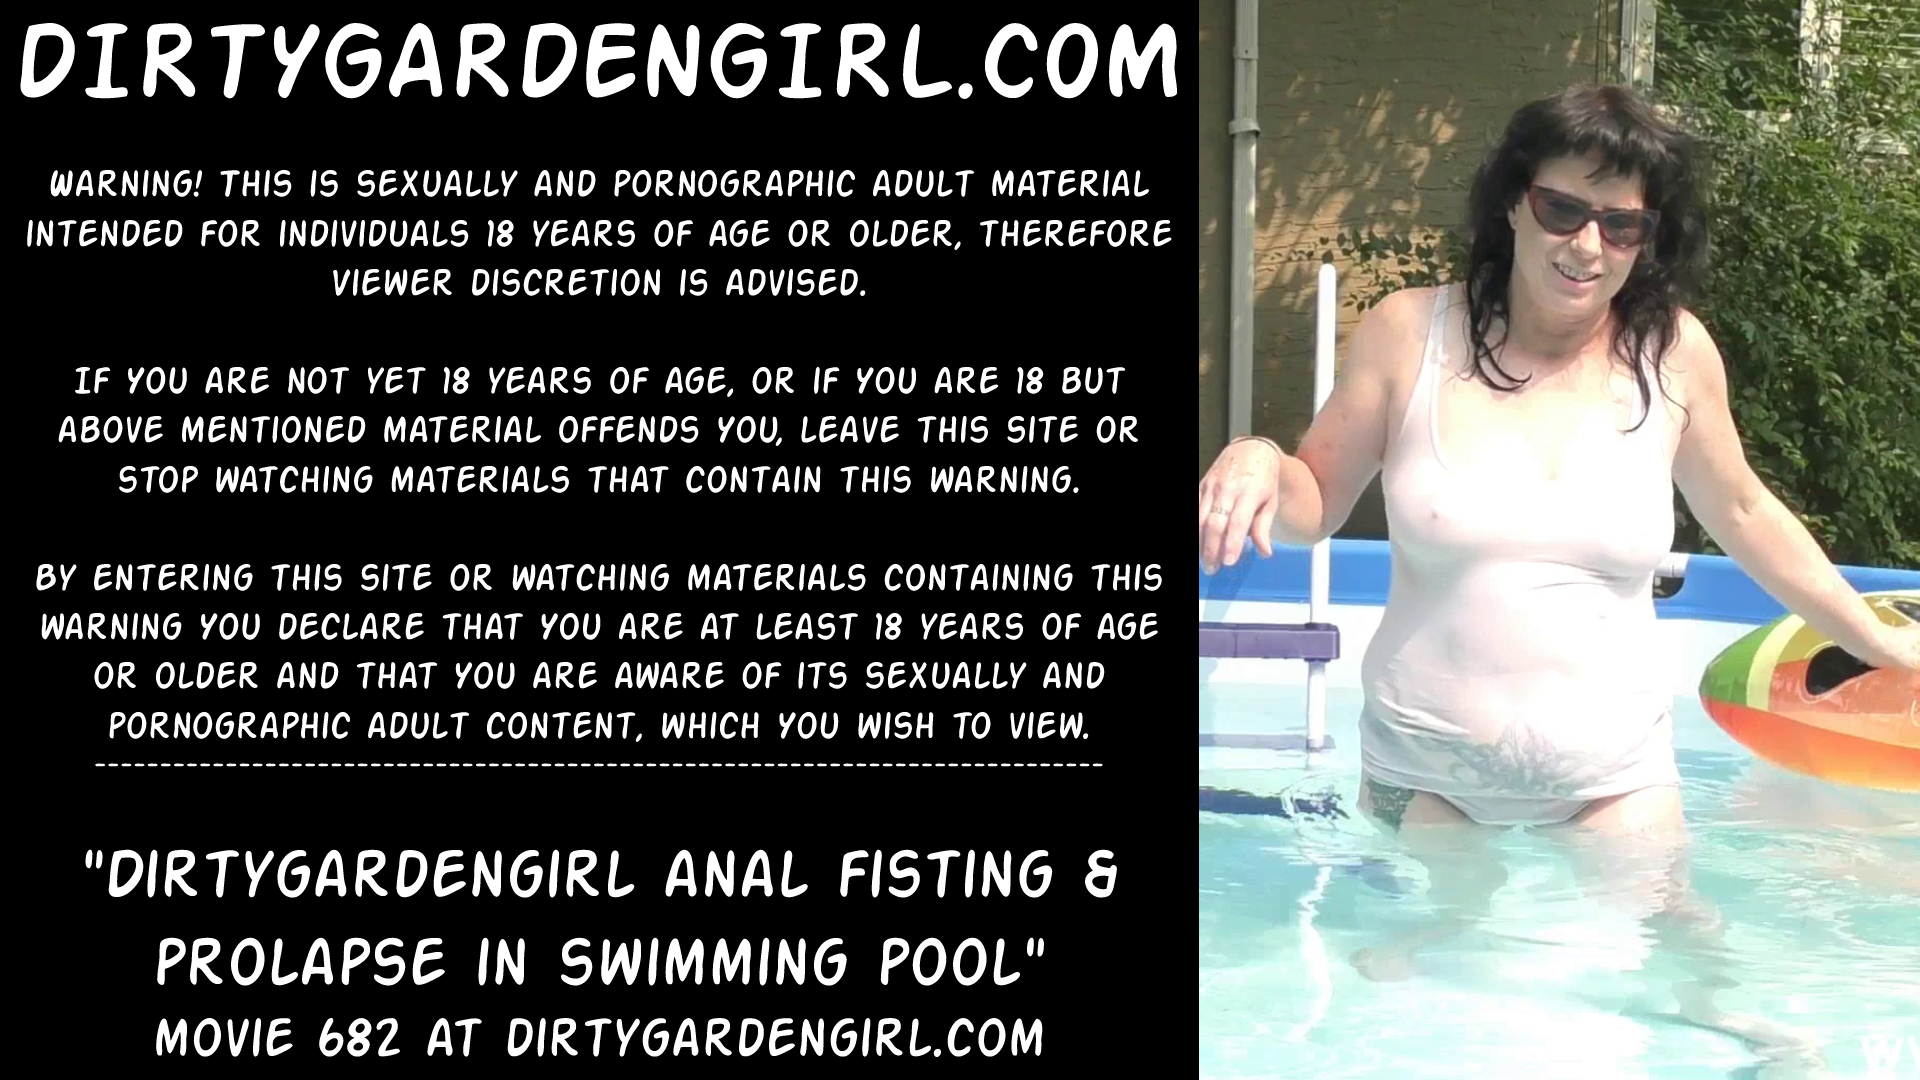 Dirtygardengirl anal fisting & prolapse swimming pool